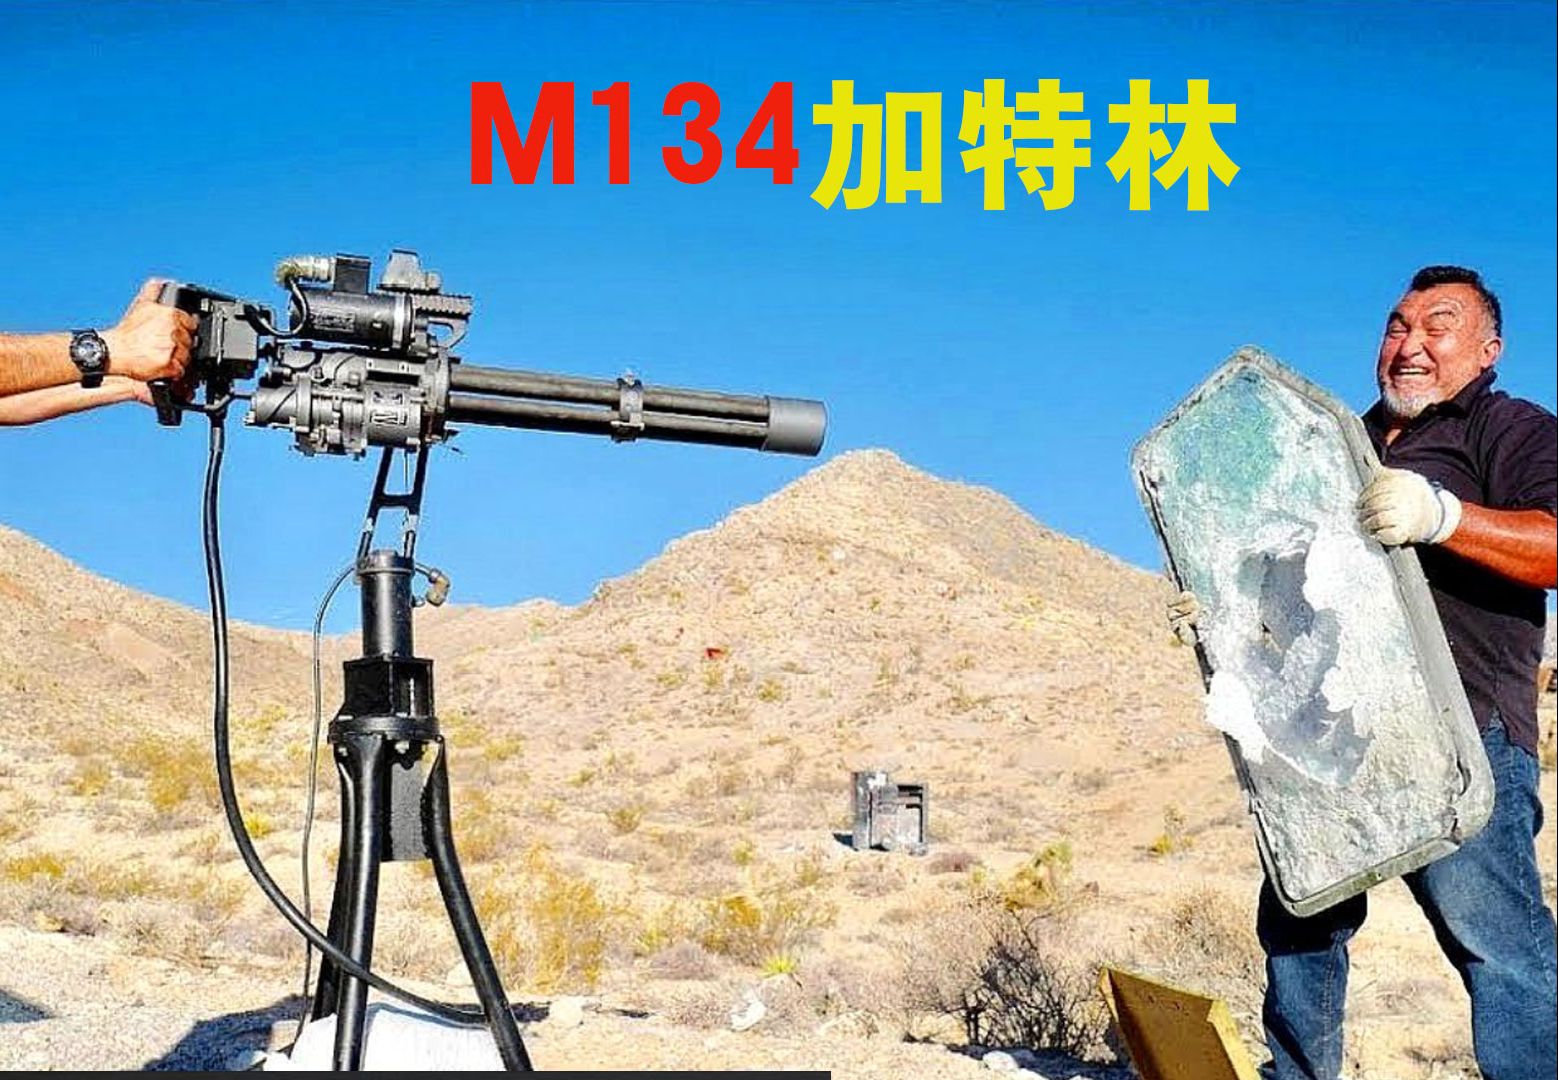 m134型加特林机枪,战场上的火力巨兽